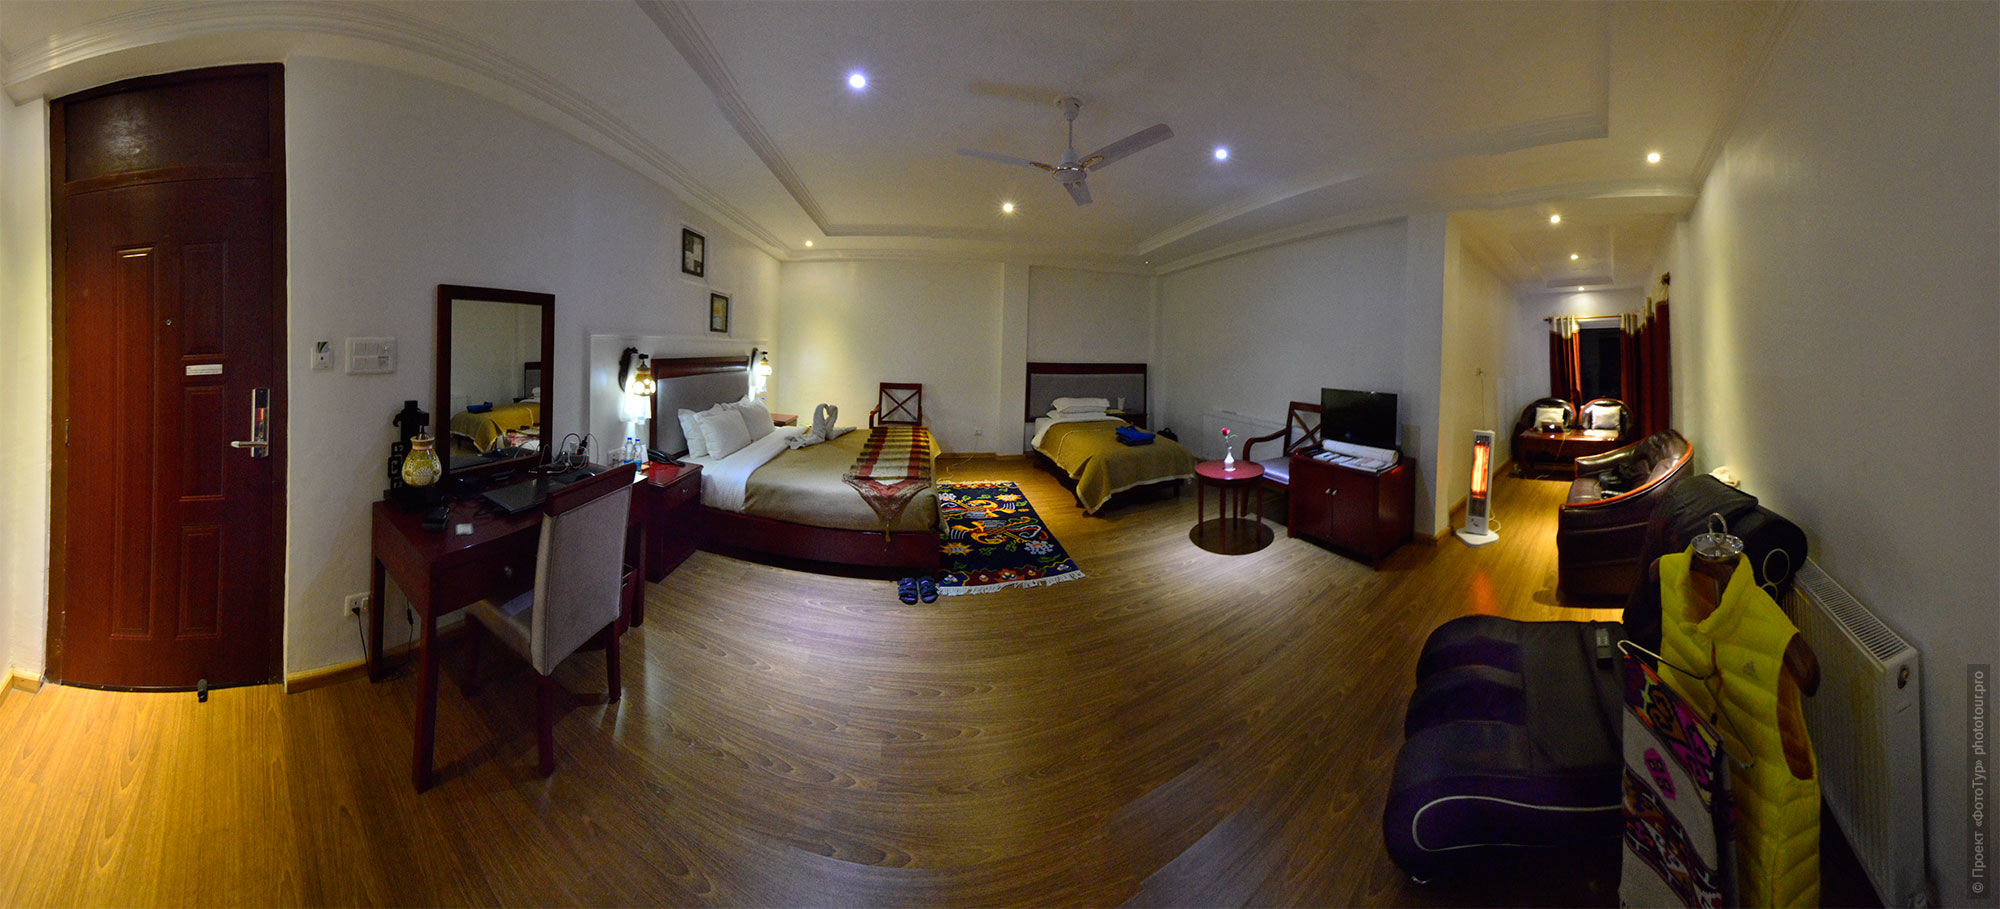 Комната в отеле Зен, Лех, Ладакх, Малый Тибет, Индия, октябрь 2018 года.